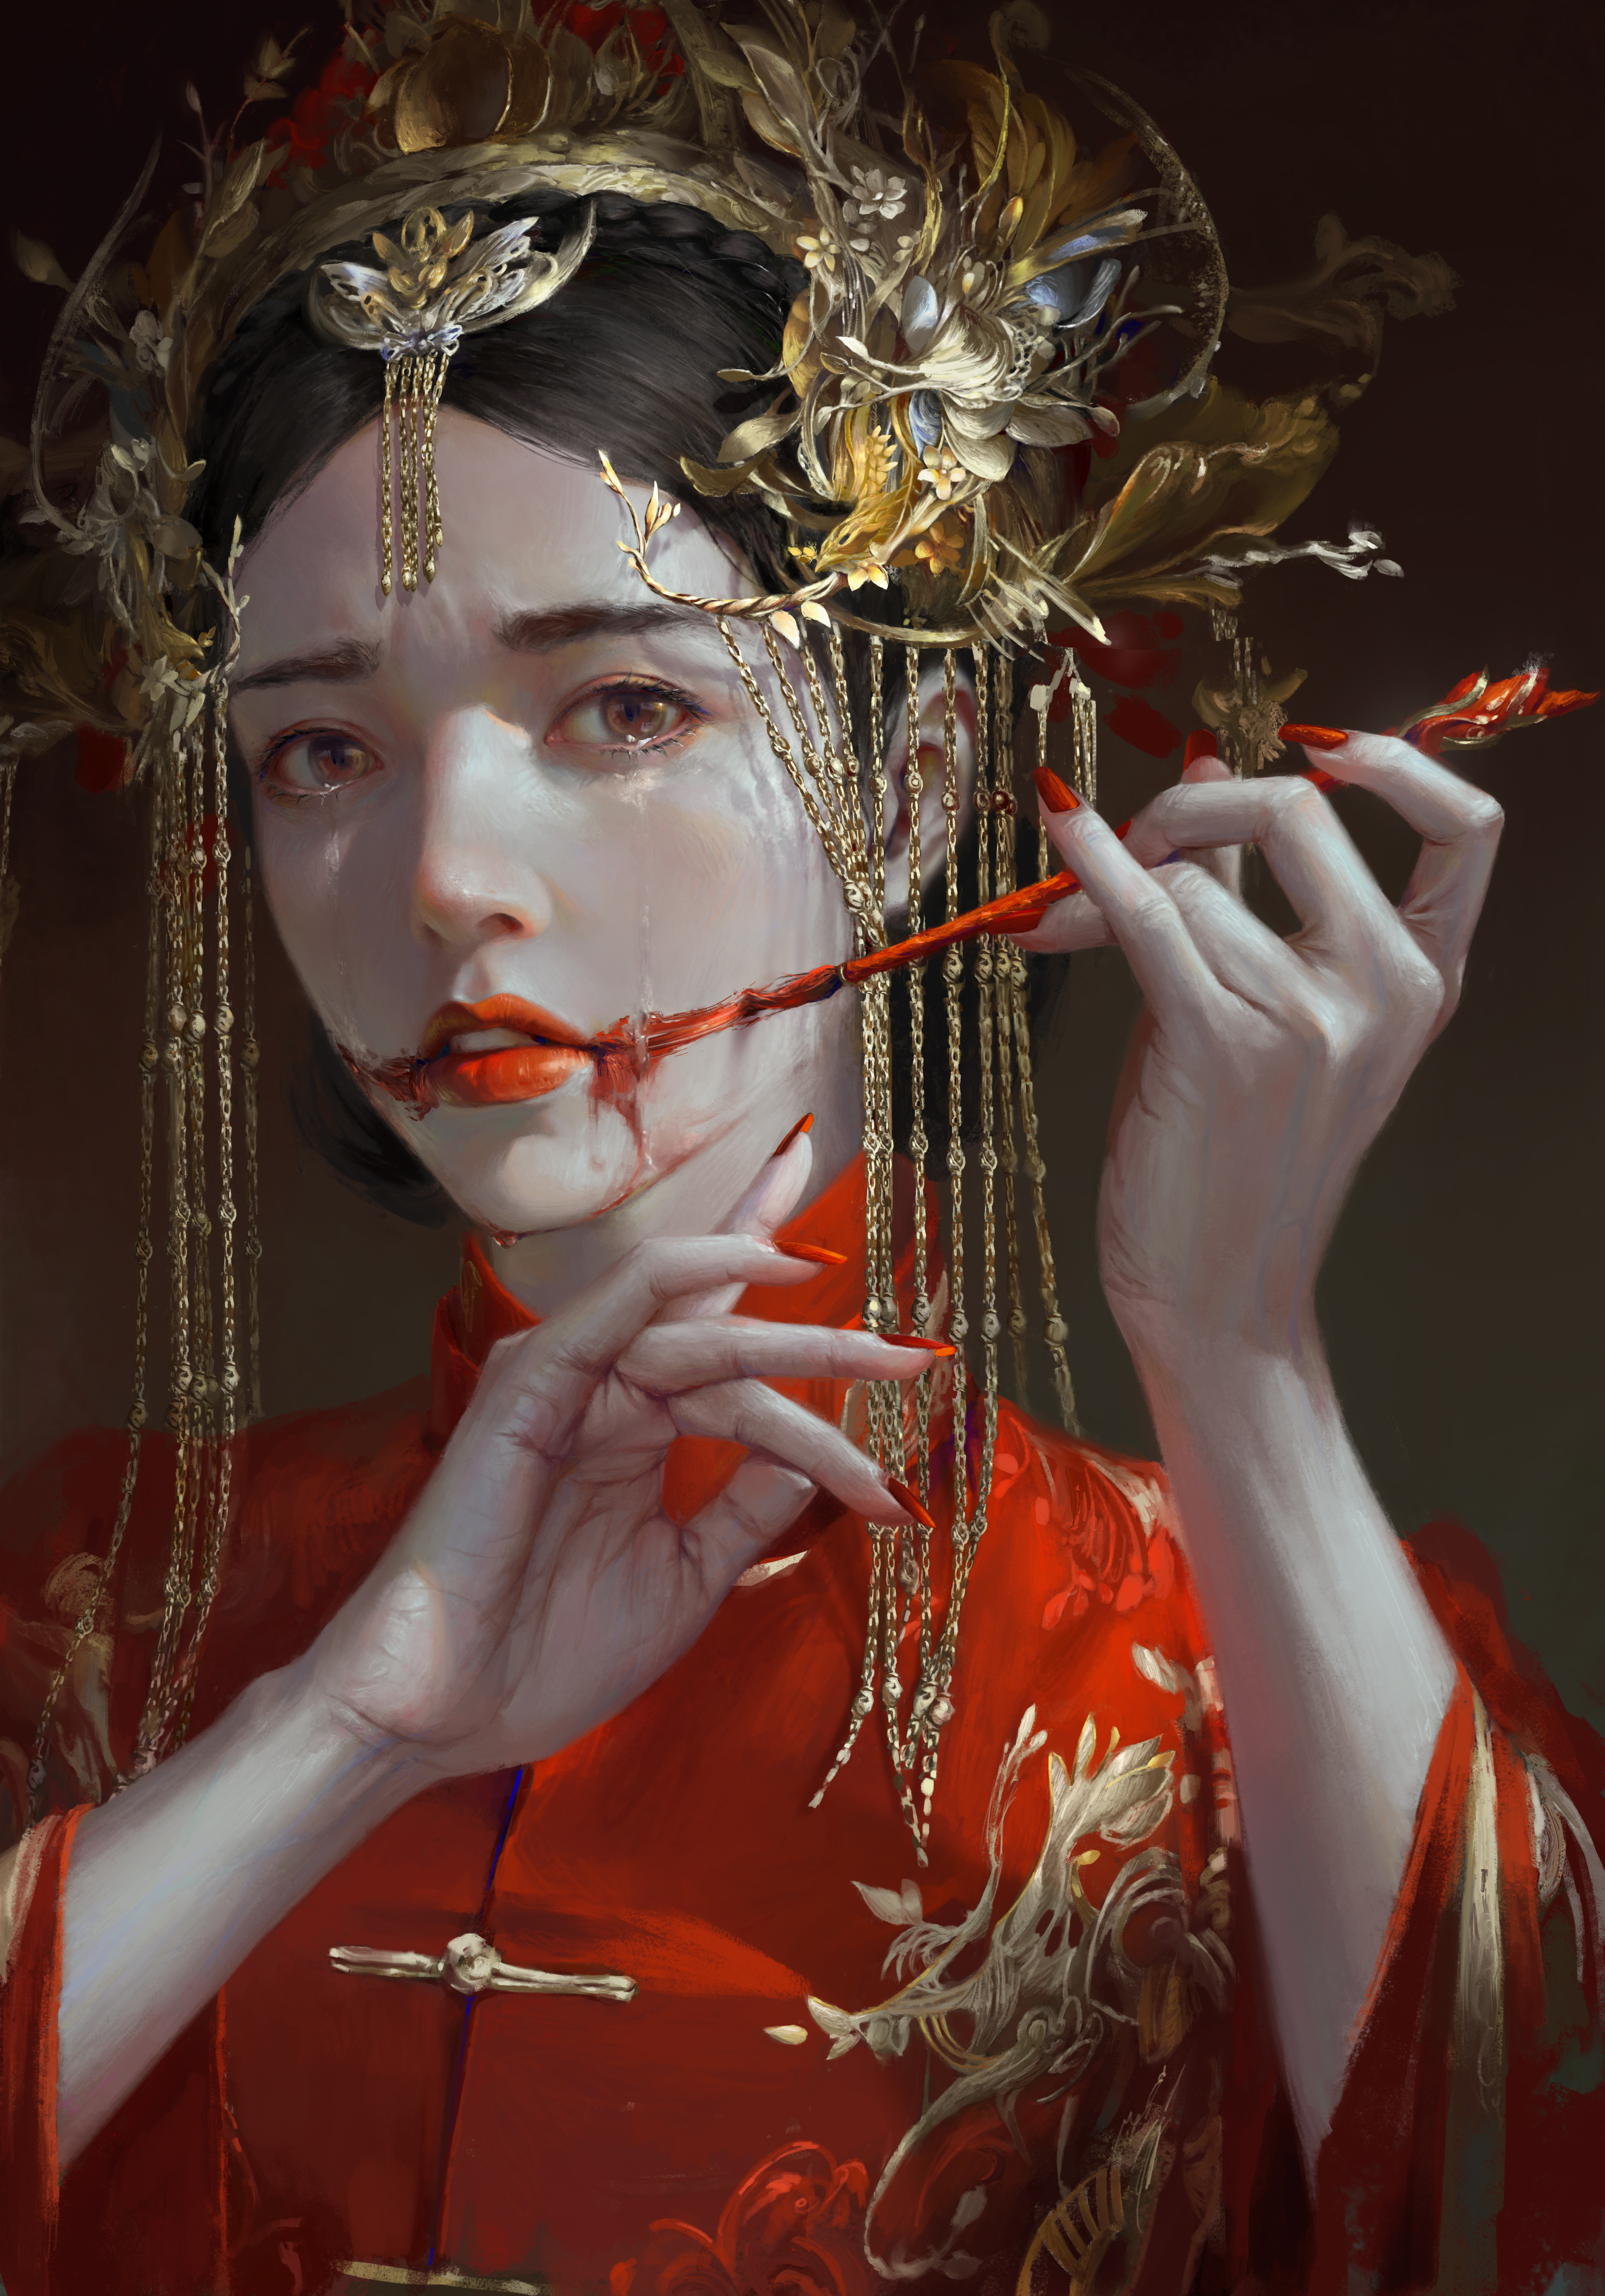 General 3840x5494 fantasy girl looking at viewer lipstick crying dress women luo ben tang mao zi digital art portrait display